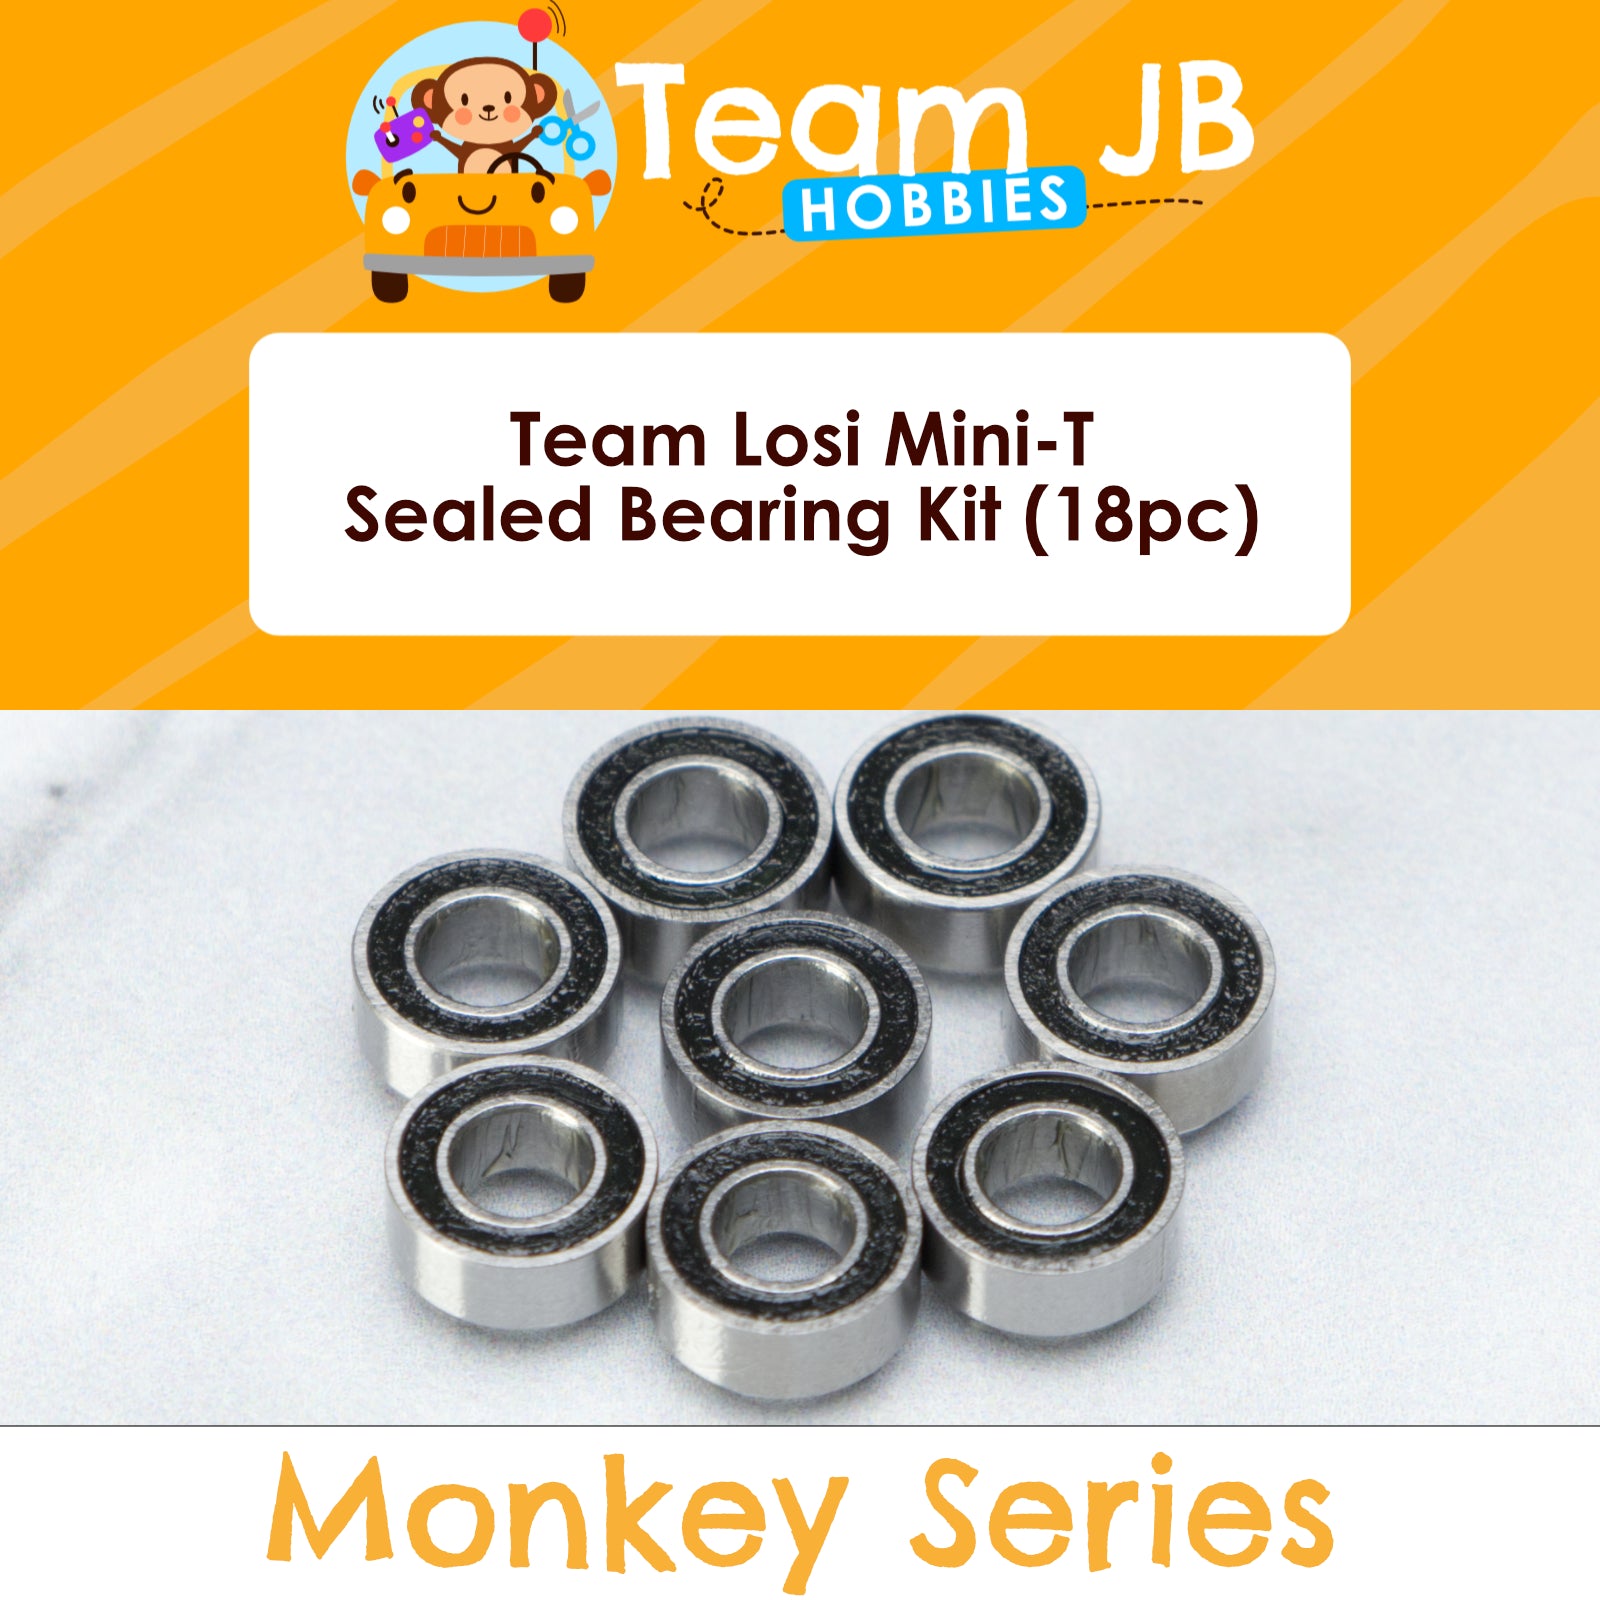 Team Losi Mini-T - Sealed Bearing Kit